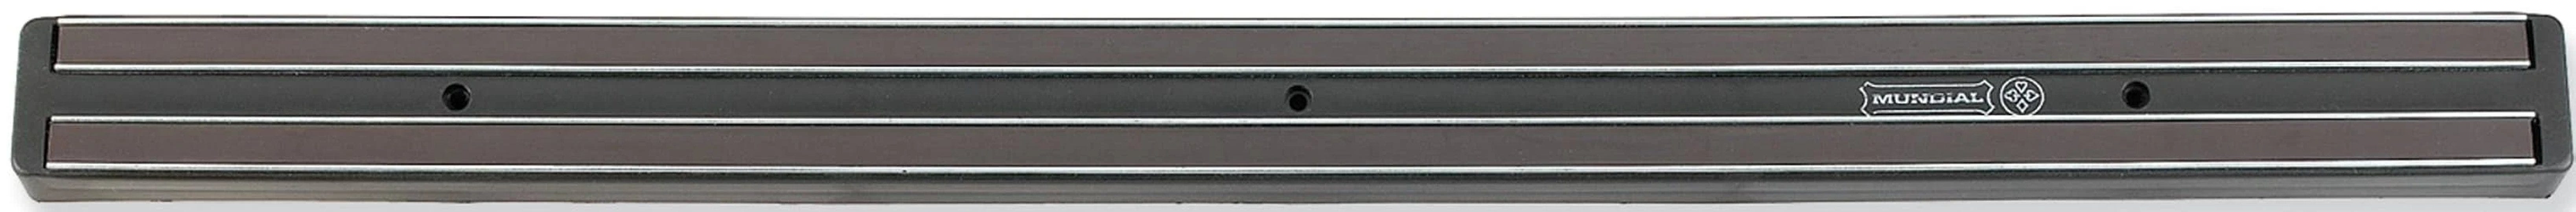 mundial-5524-24-inch-magnetic-bar-1